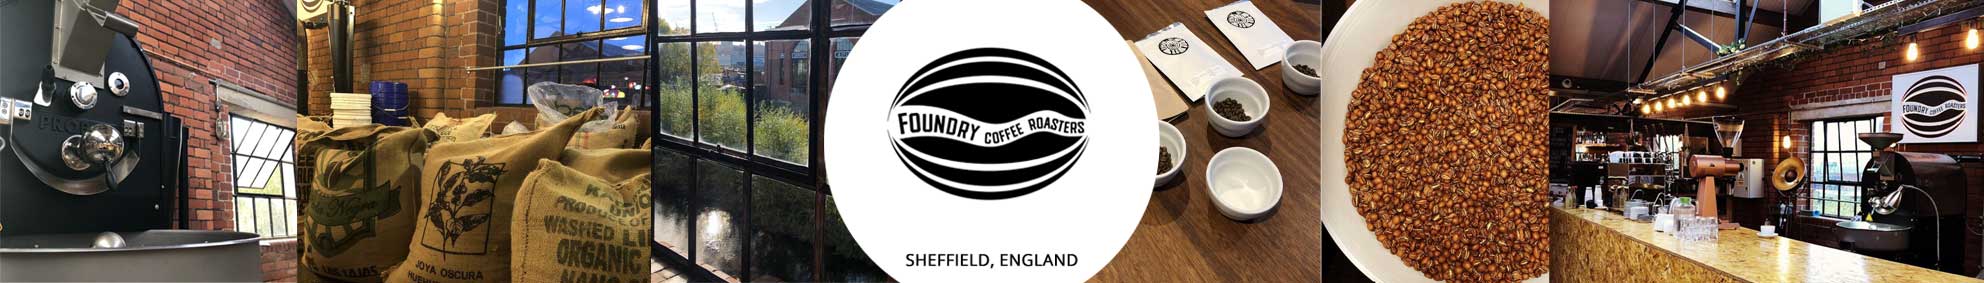 Foundry Coffee Roasters Speciality Coffee